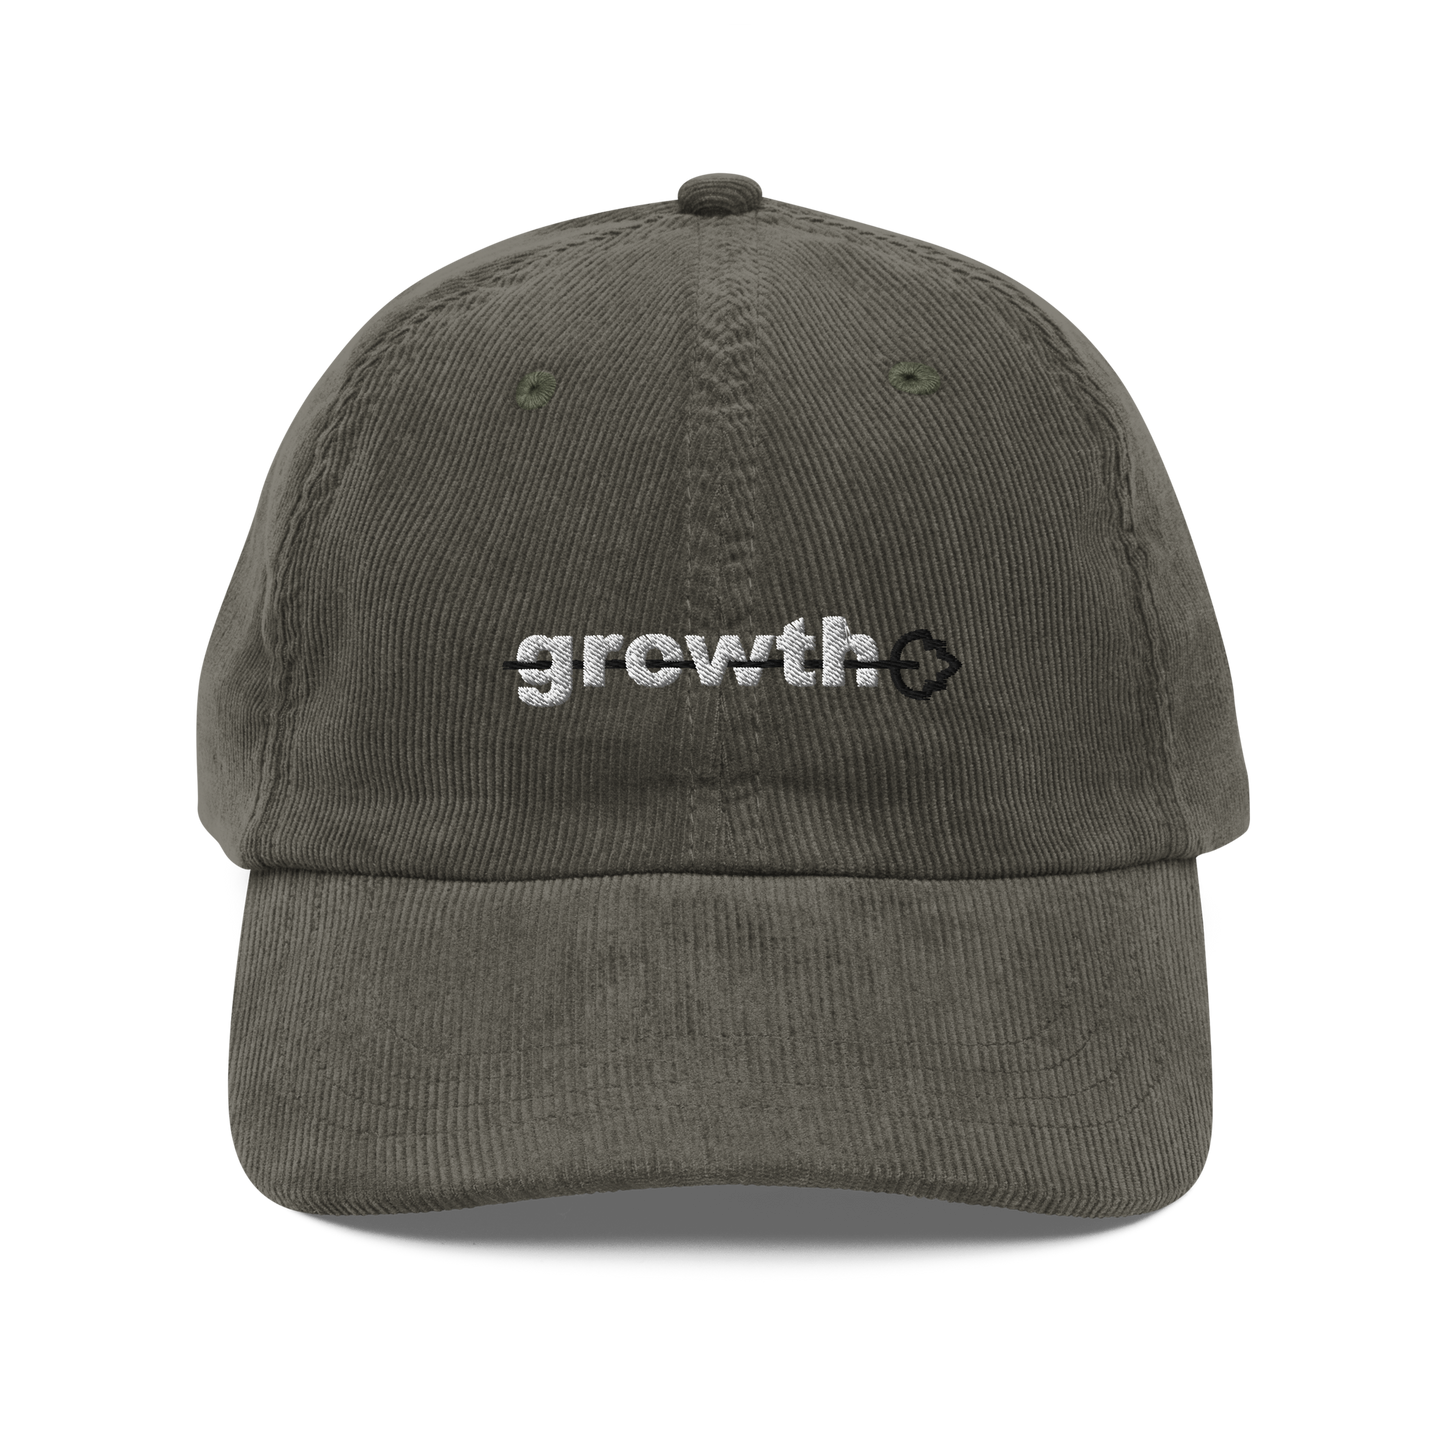 Growth Vintage corduroy cap